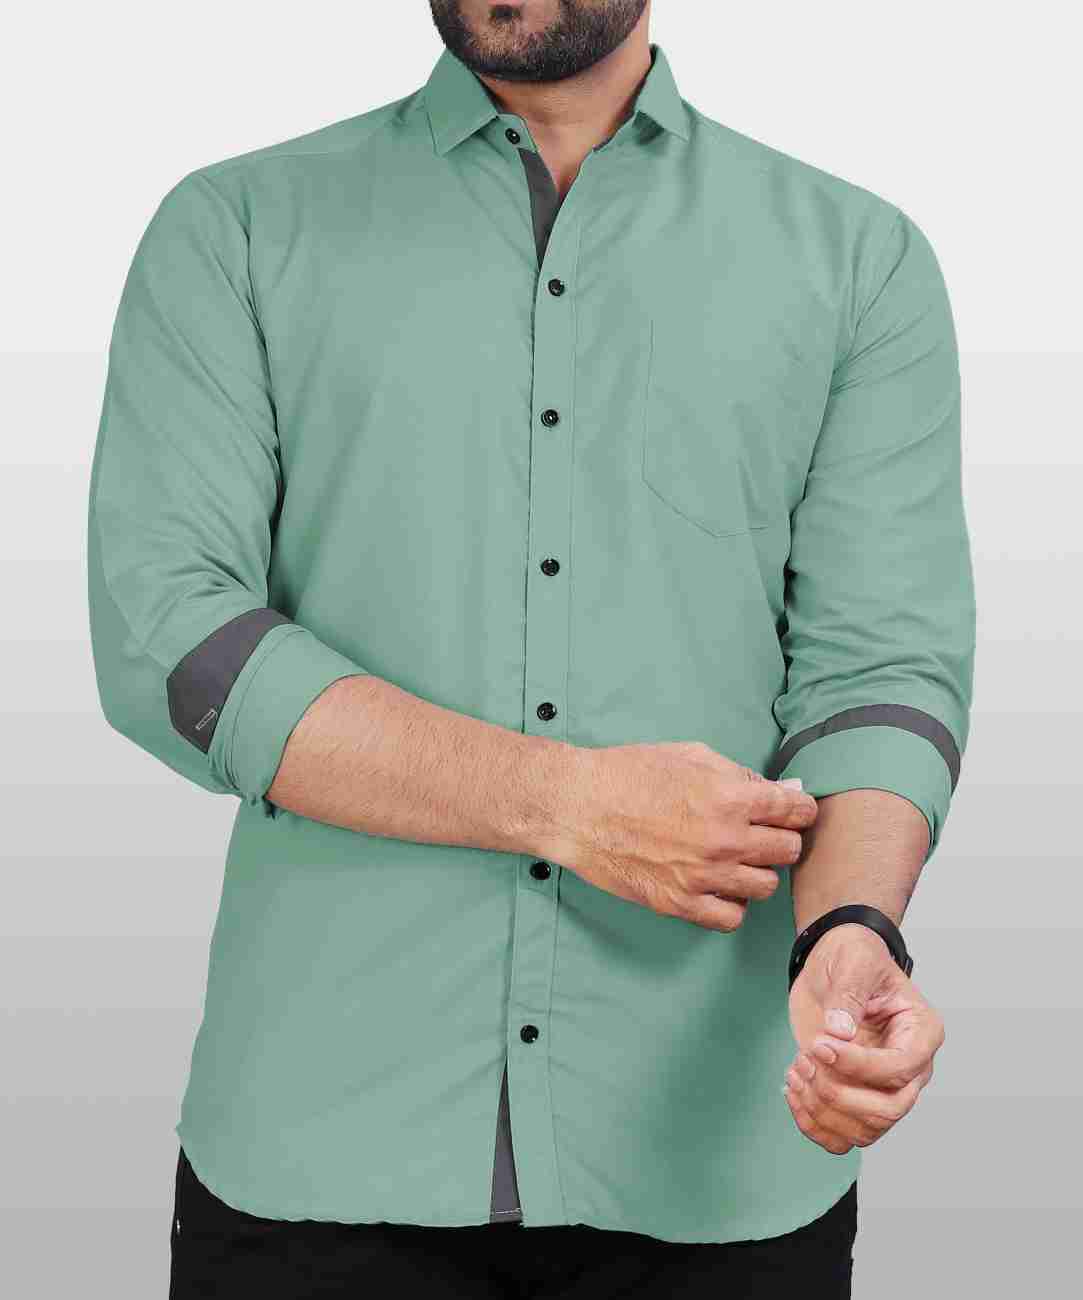 K2z cotton shirt green